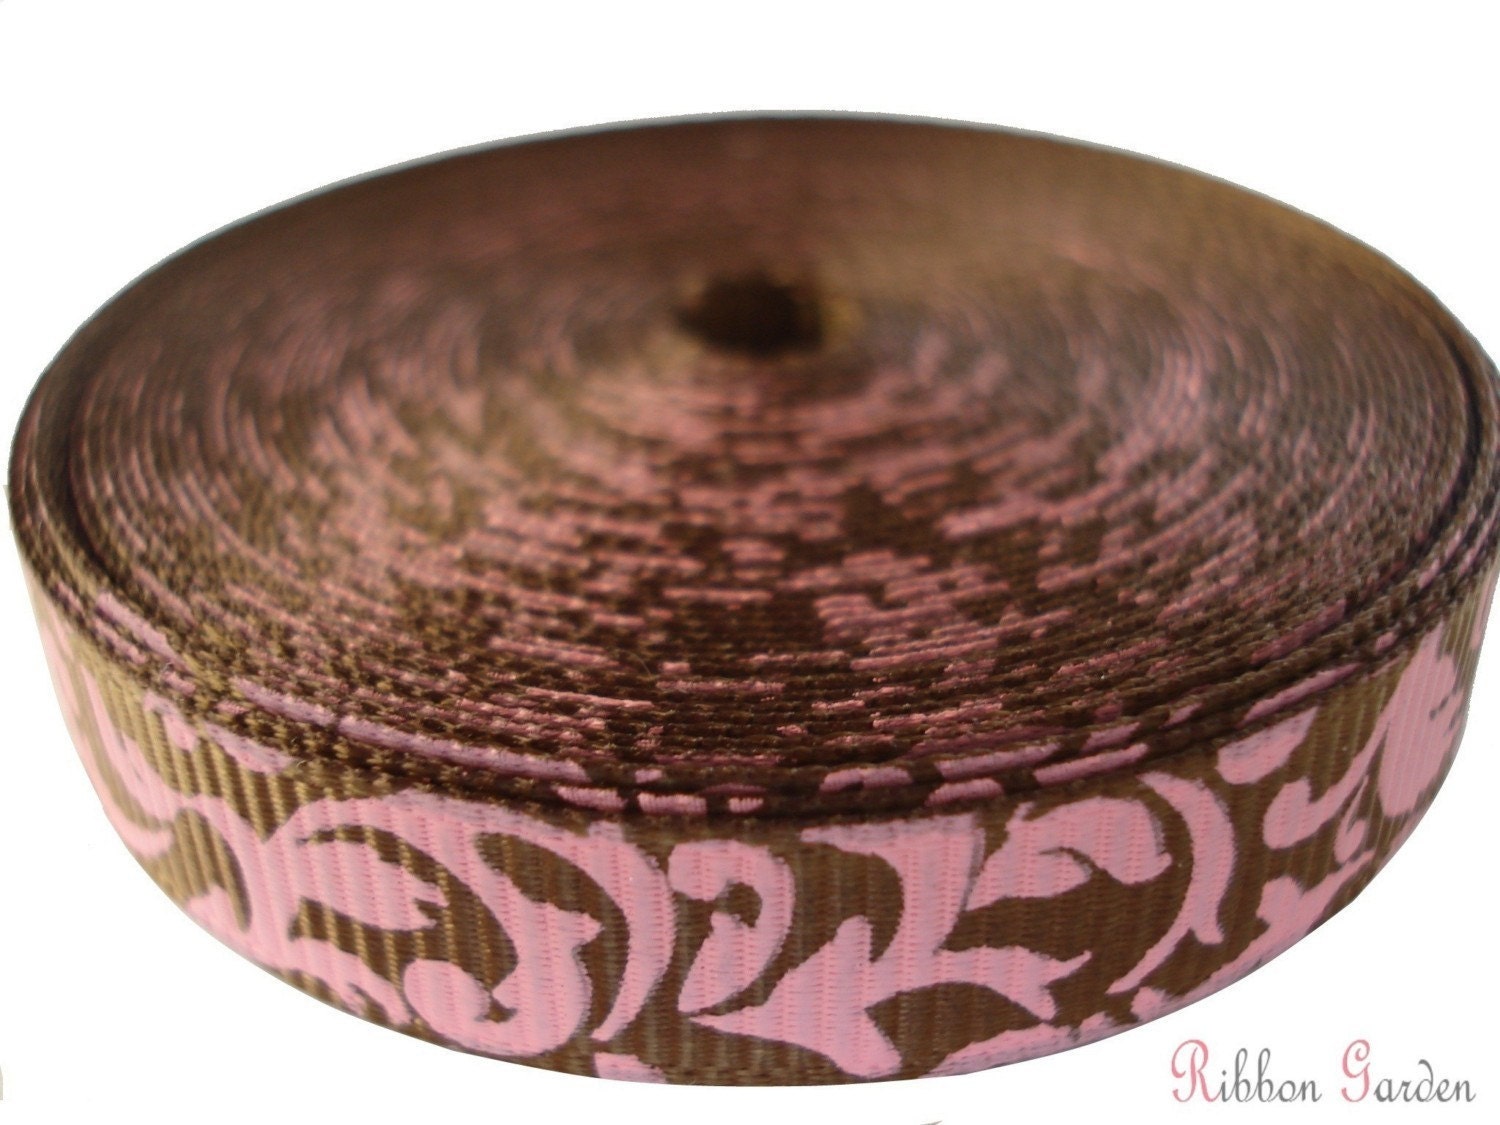 5 yards - Damask Swirls Grosgrain Ribbon - Light Brown and Pink - 3/8 inch wide - Damask Prints